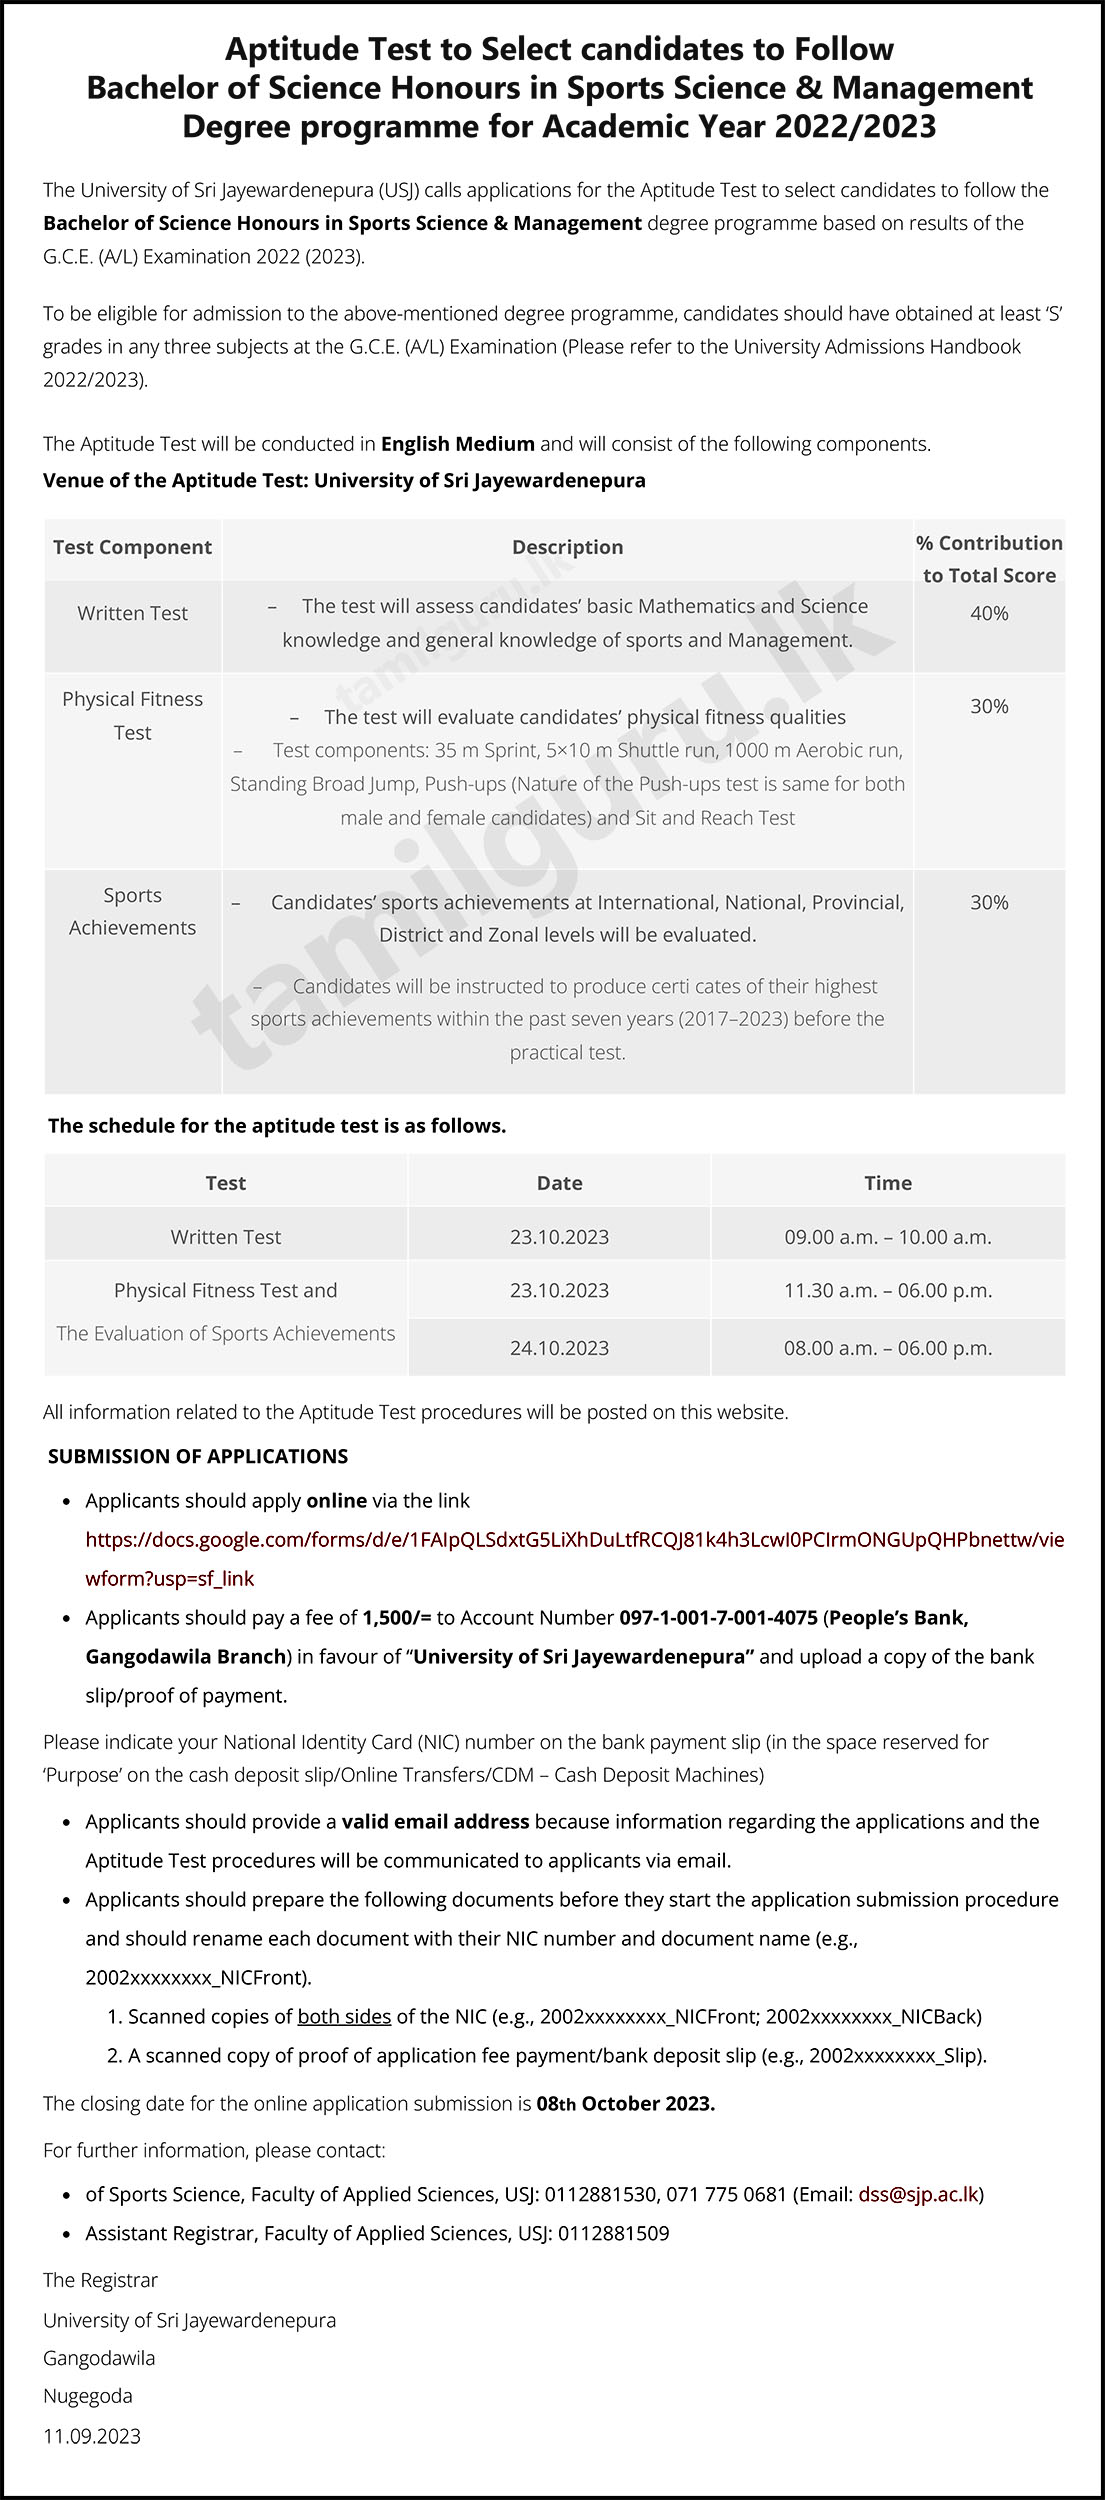 University of Sri Jayewardenepura Sports Sciences & Management Aptitude Test Application 2023